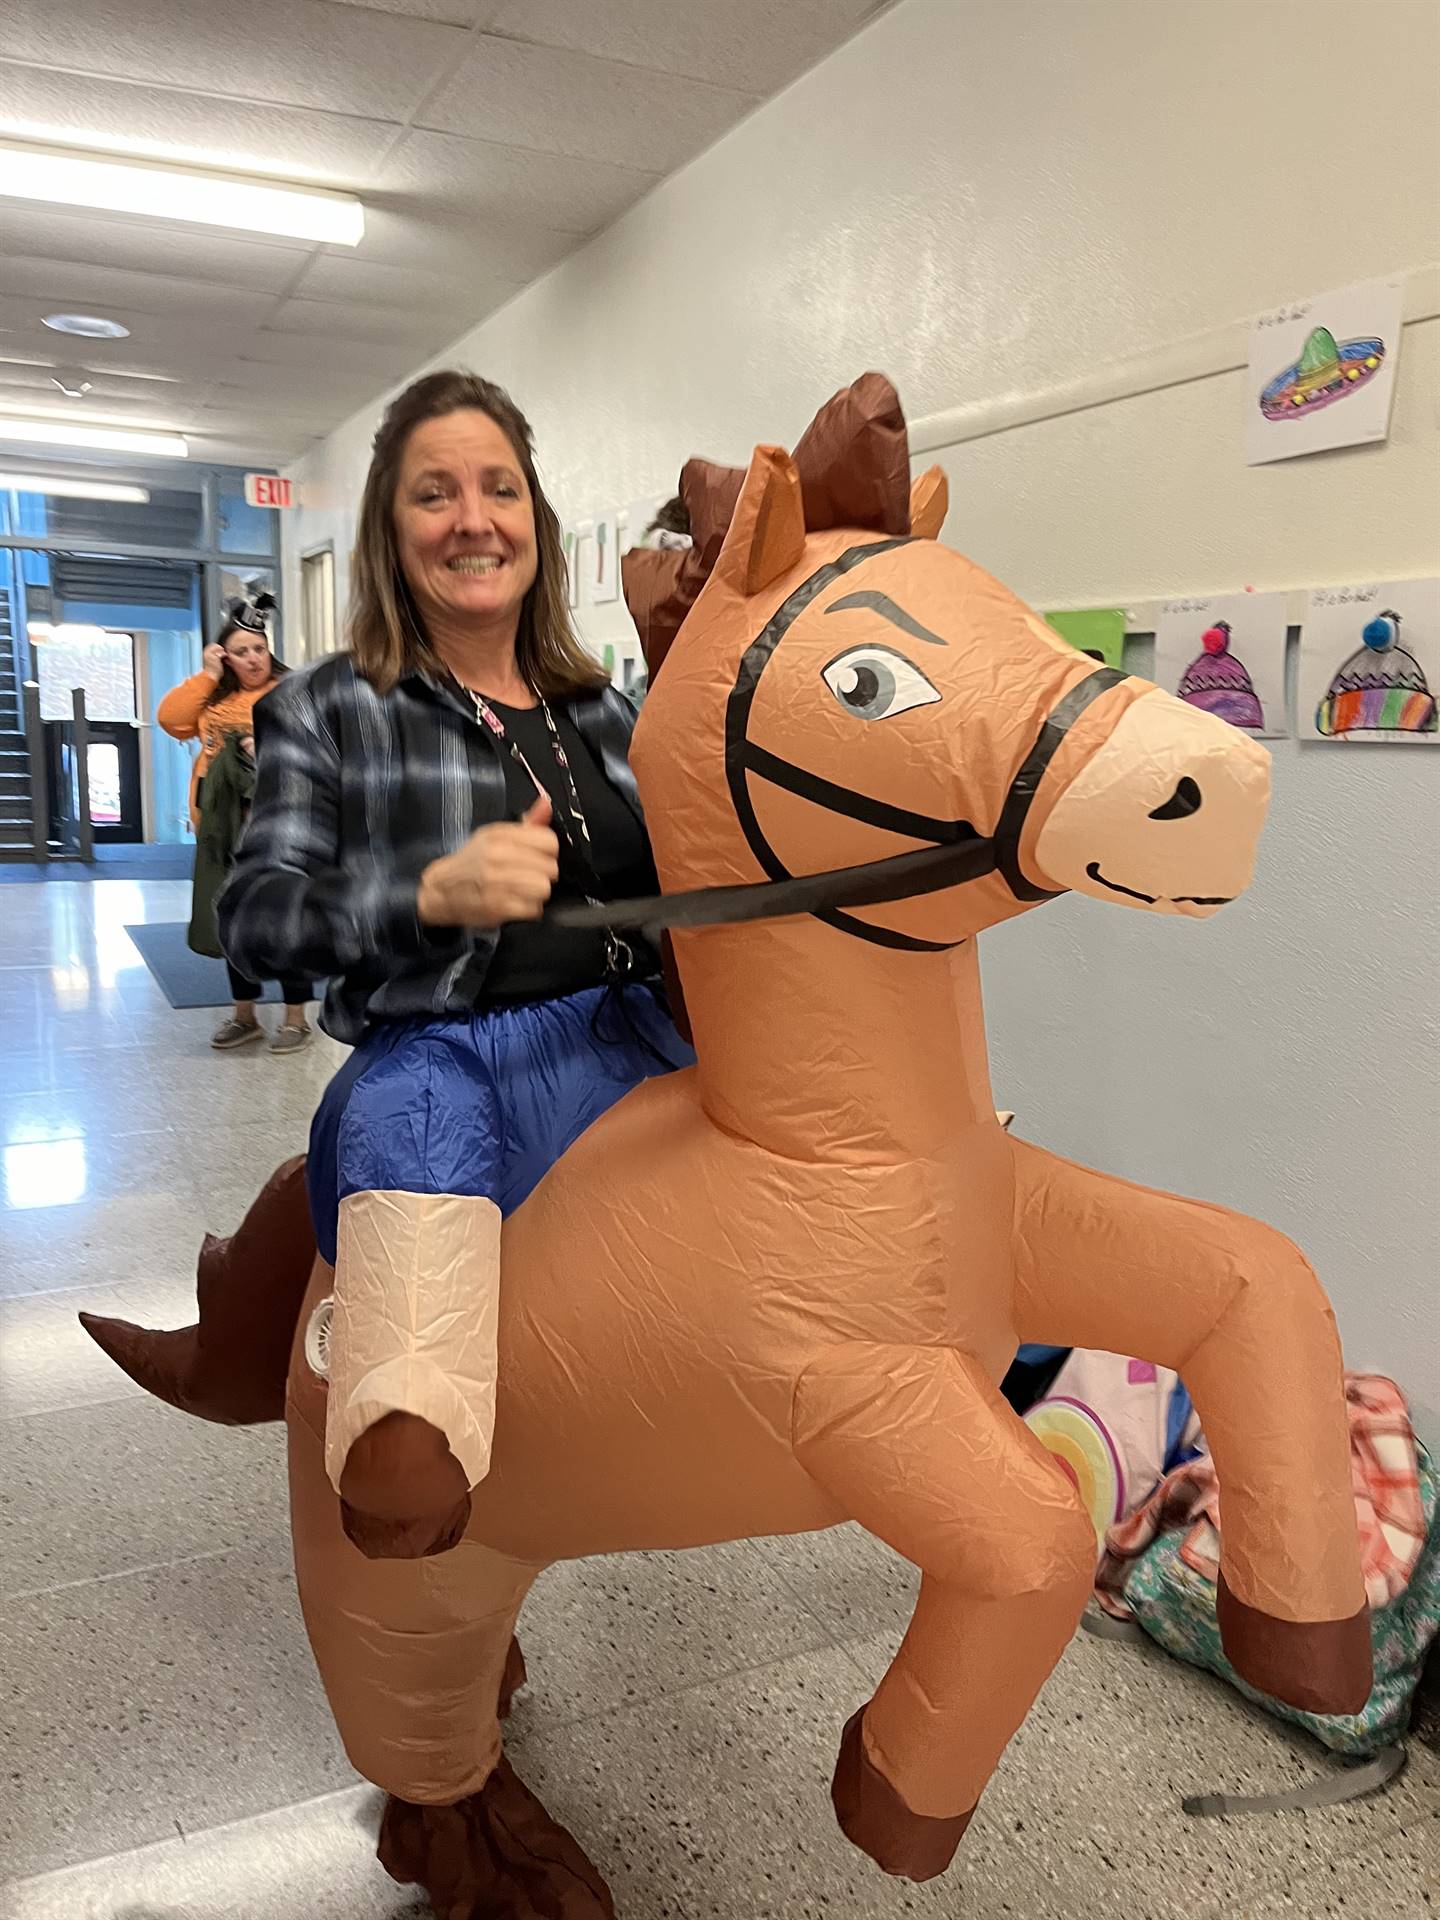 A teacher on a blow up horse for halloween